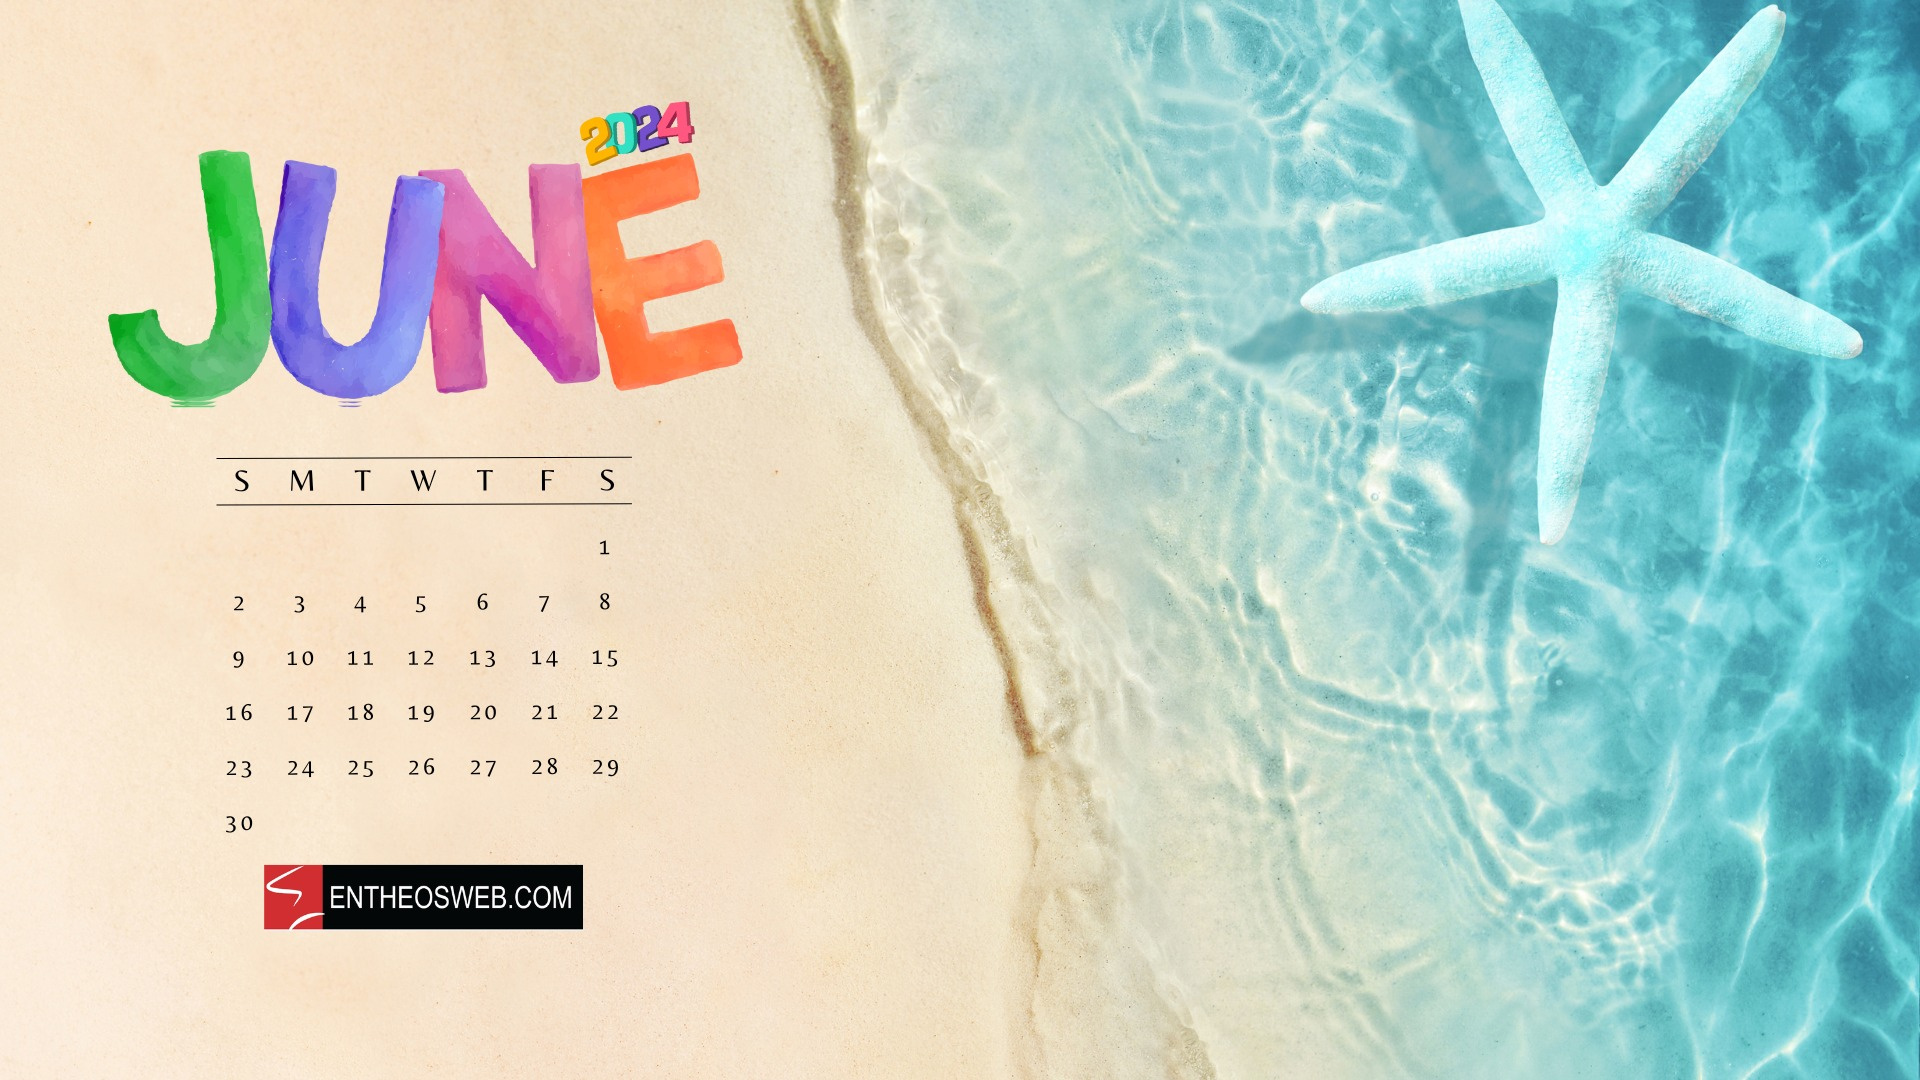 June 2024 Desktop Wallpaper Calendars | Entheosweb in June 2024 Desktop Wallpaper Calendar